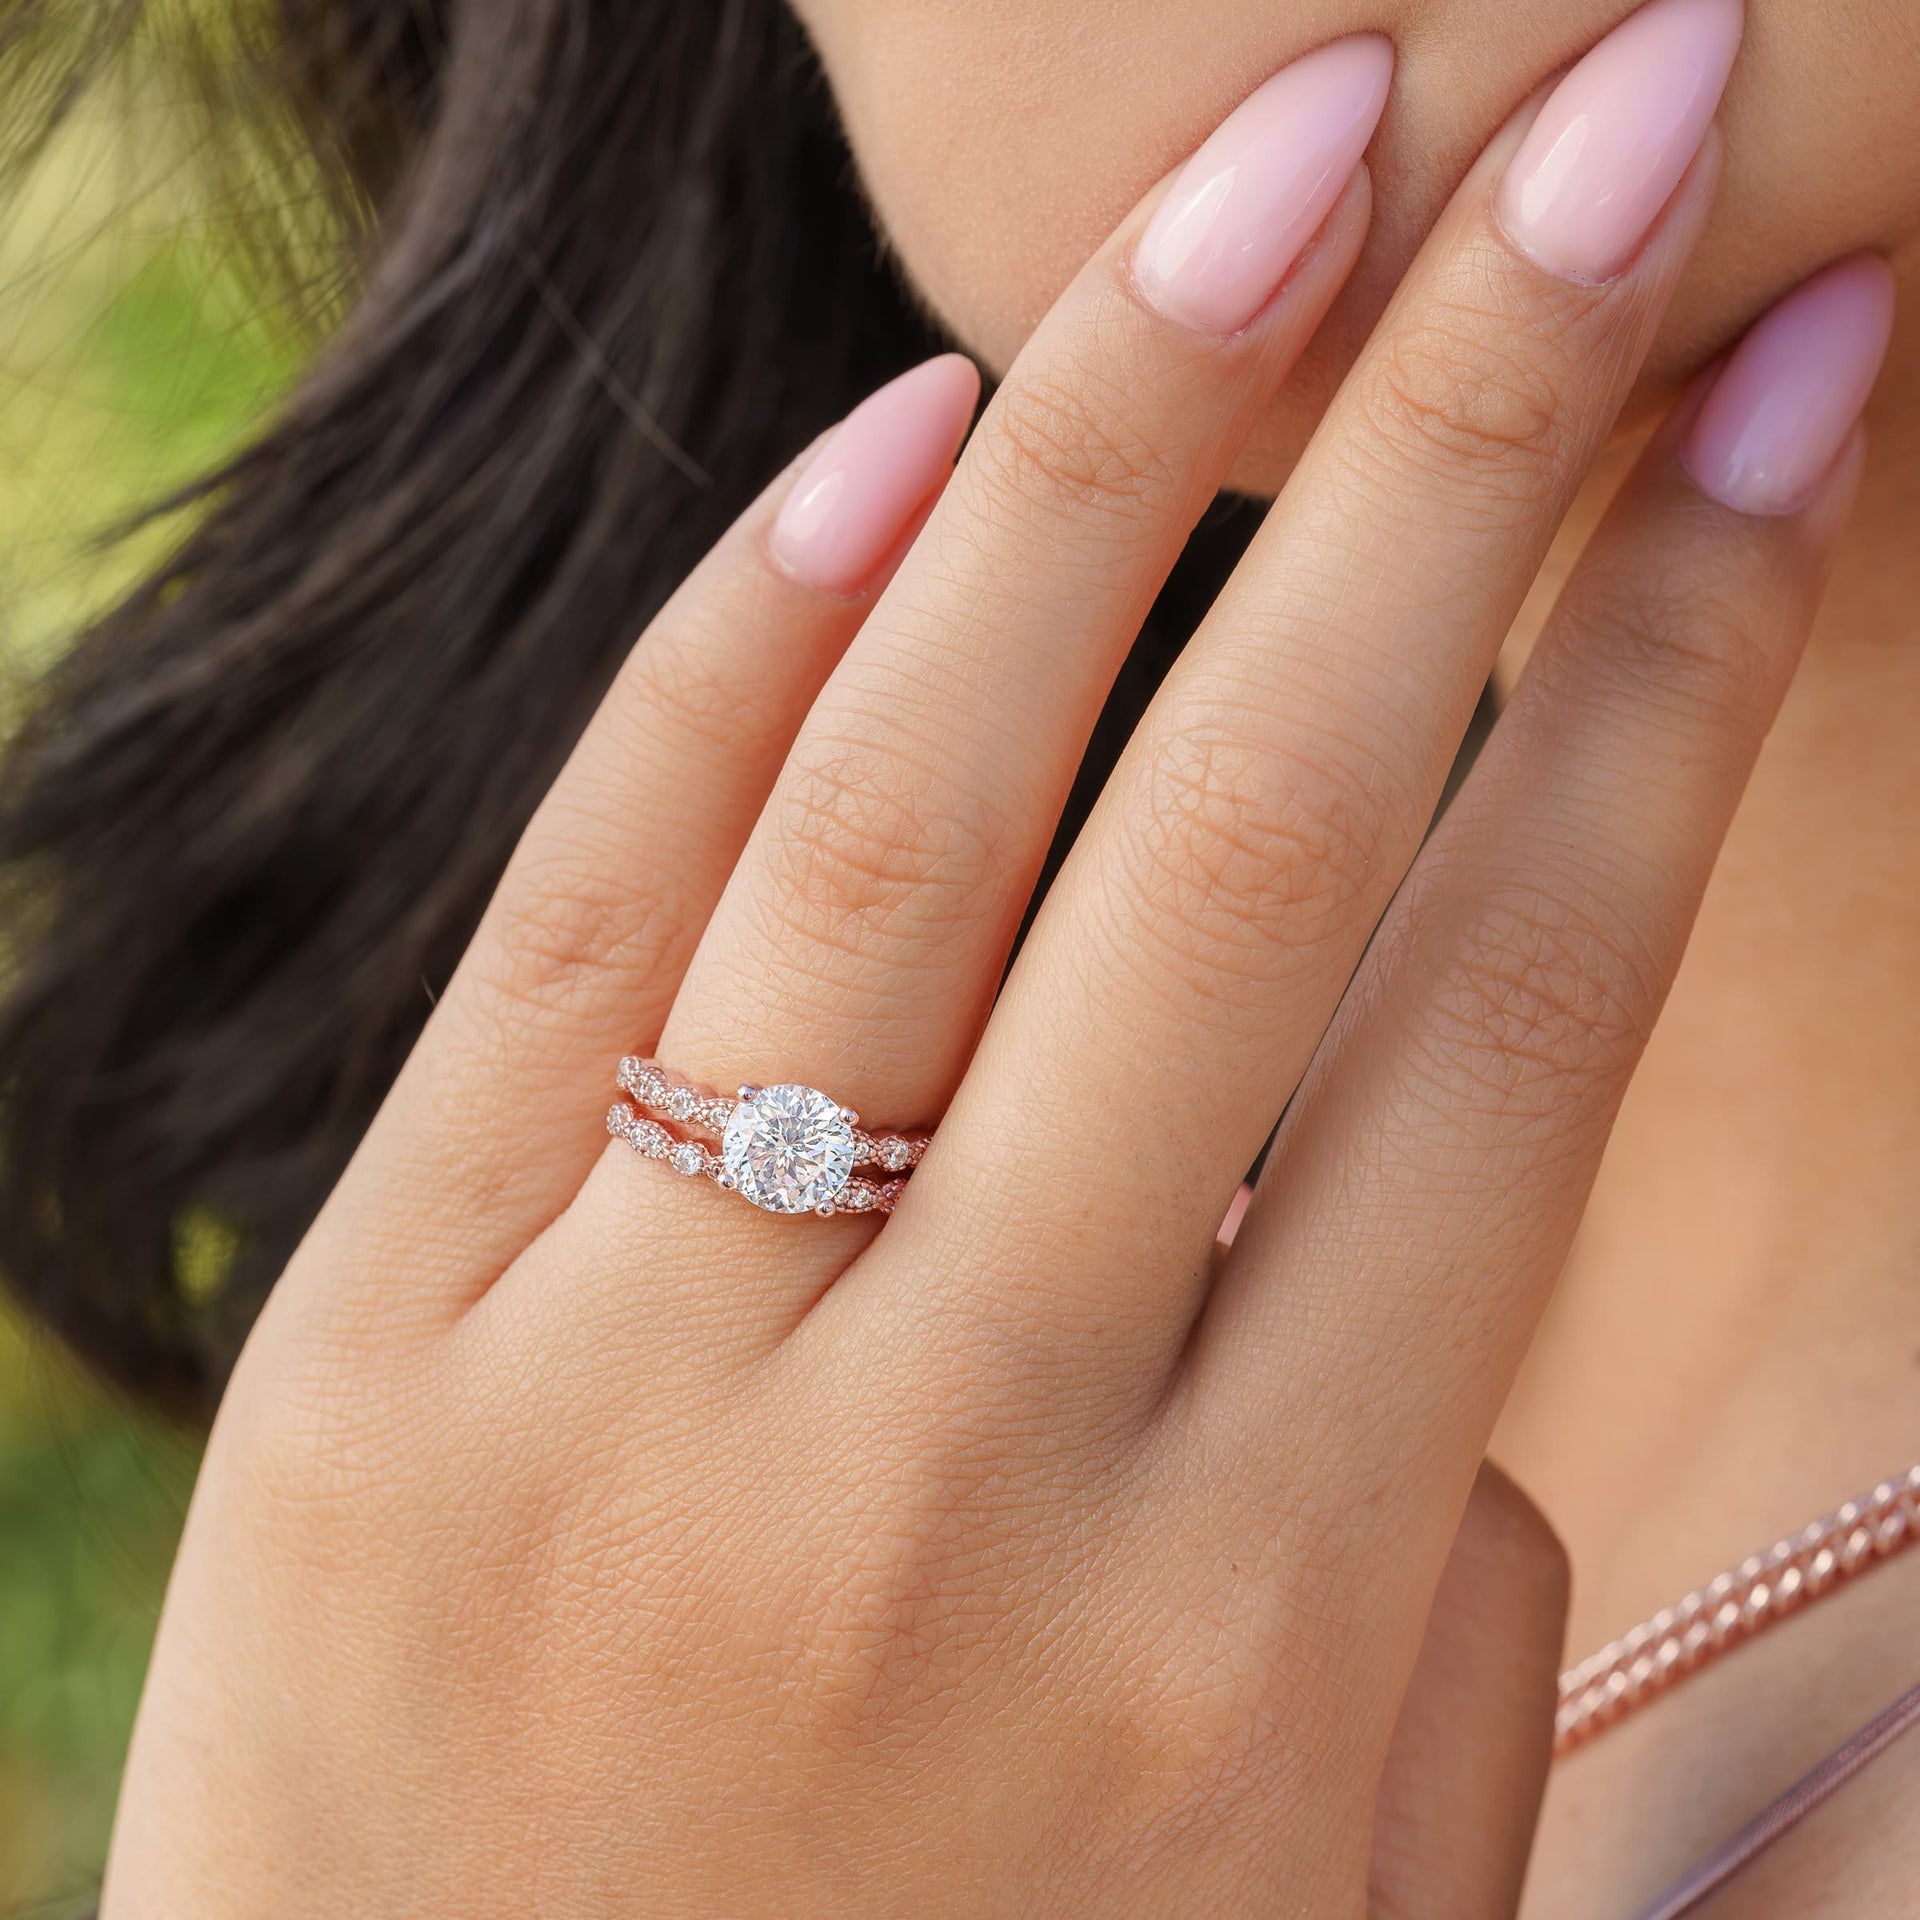 Nikki Bella Shares First Close-Up Look at Engagement Ring